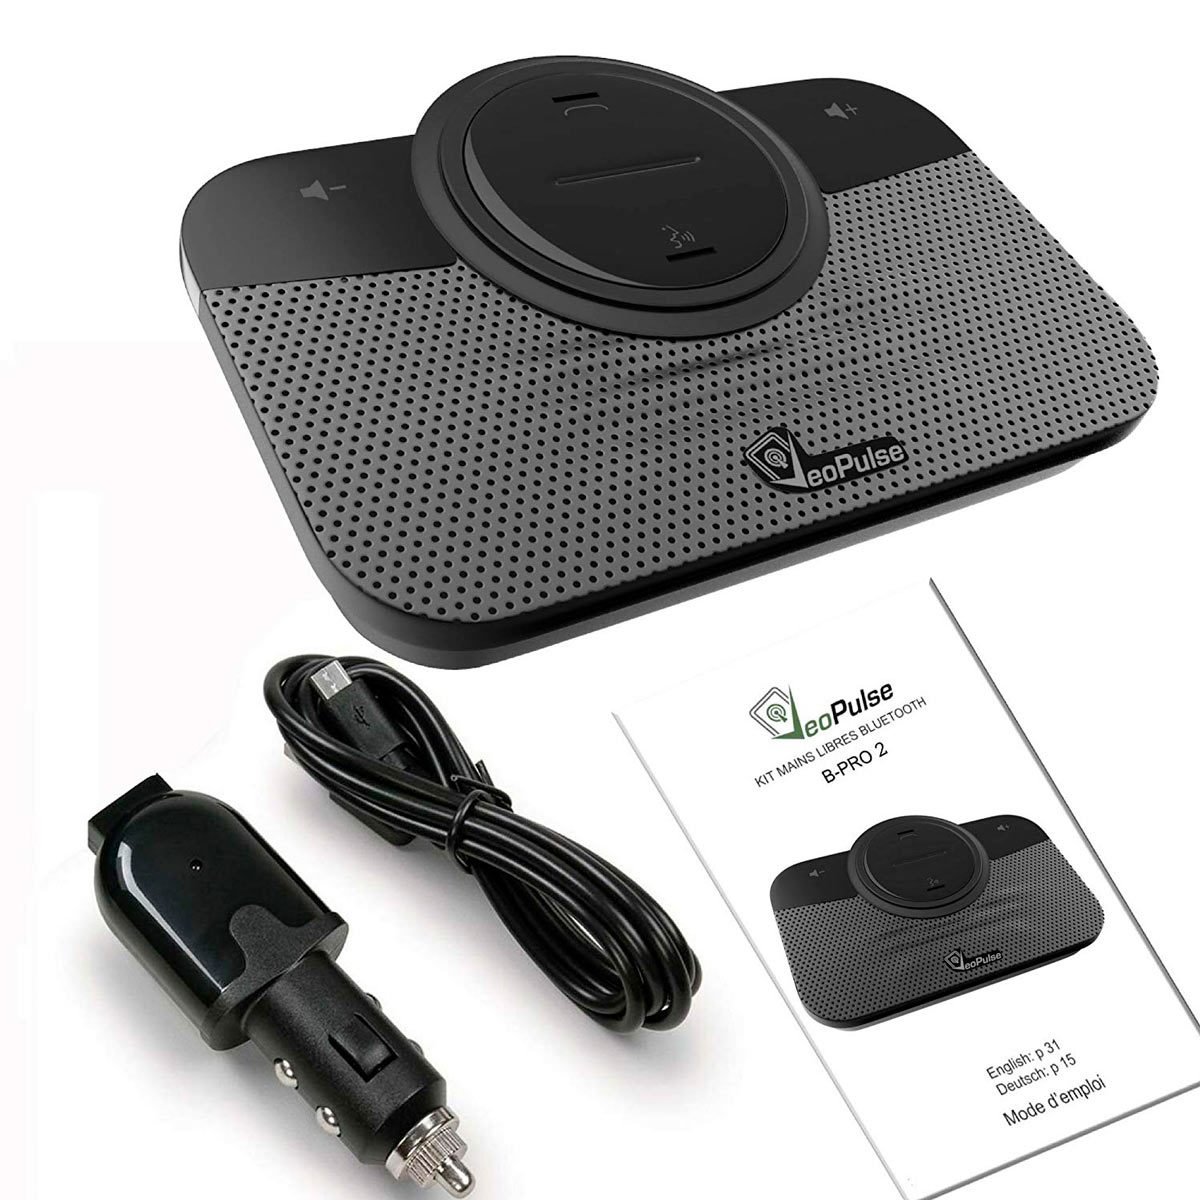 Bluetooth Handsfree Speaker For Cell Phone, Wireless Car Speaker Motion Auto  Power On Car Receiver Visor Music